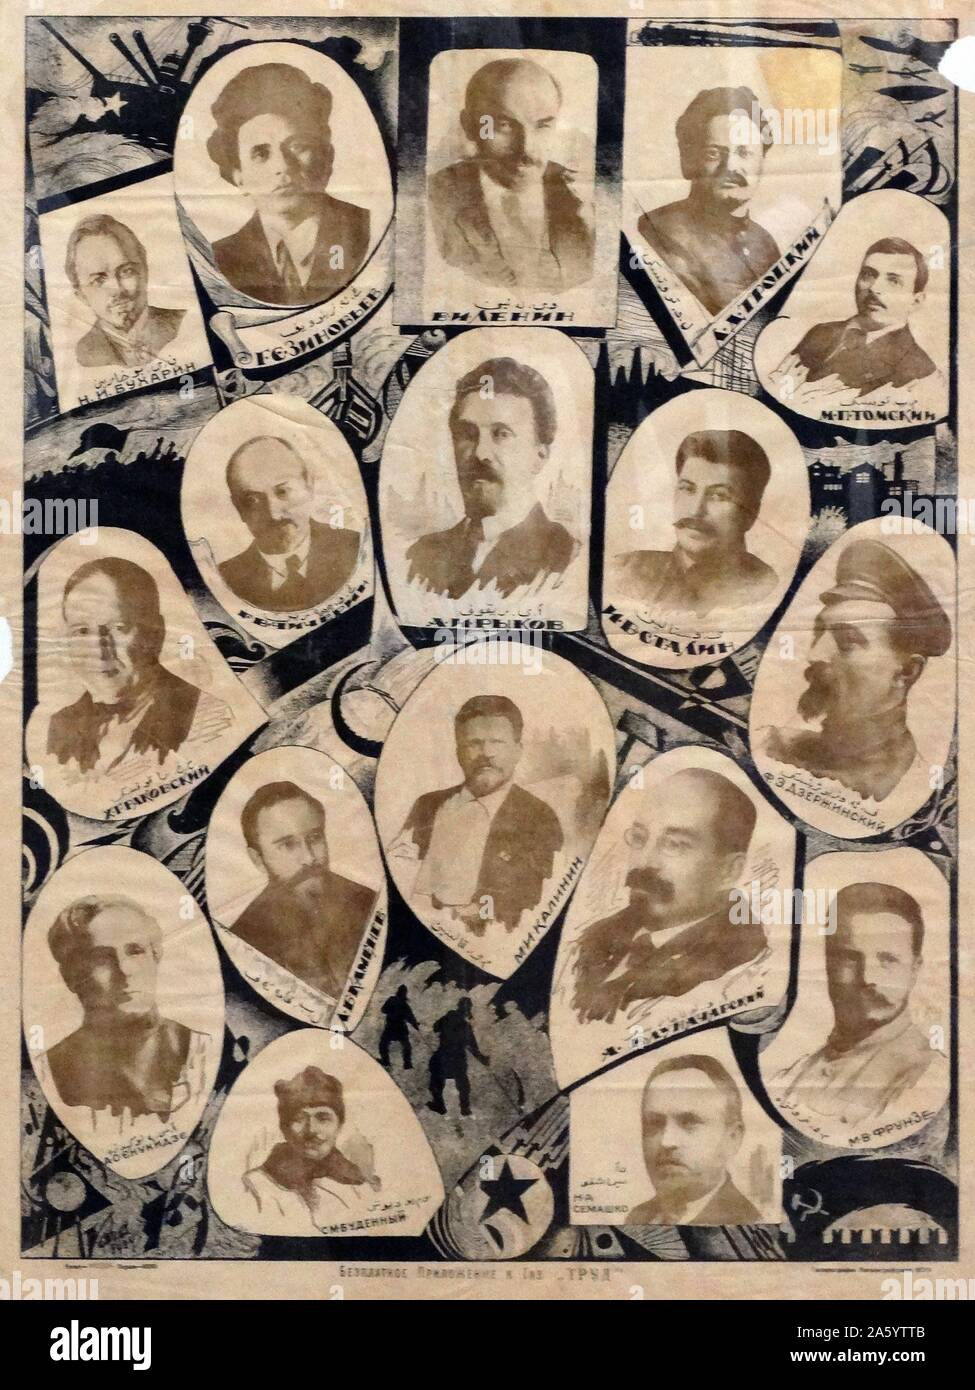 Composite poster of Soviet Bolshevik Officials, from Central Asian newspaper Trud ('Work') 1924. Lithograph on paper. Top row: Bukharin, Zinoviev, Lenin, Trotsky, Tomsky. Second row: Rakovsky, Chicherin, Rykov, Stalin, Dzerzhinsky. Third row: Yenukidze, Kamenev, Kalinia lunacharsky, Frunze. Front row: Budenny, Semashko Stock Photo